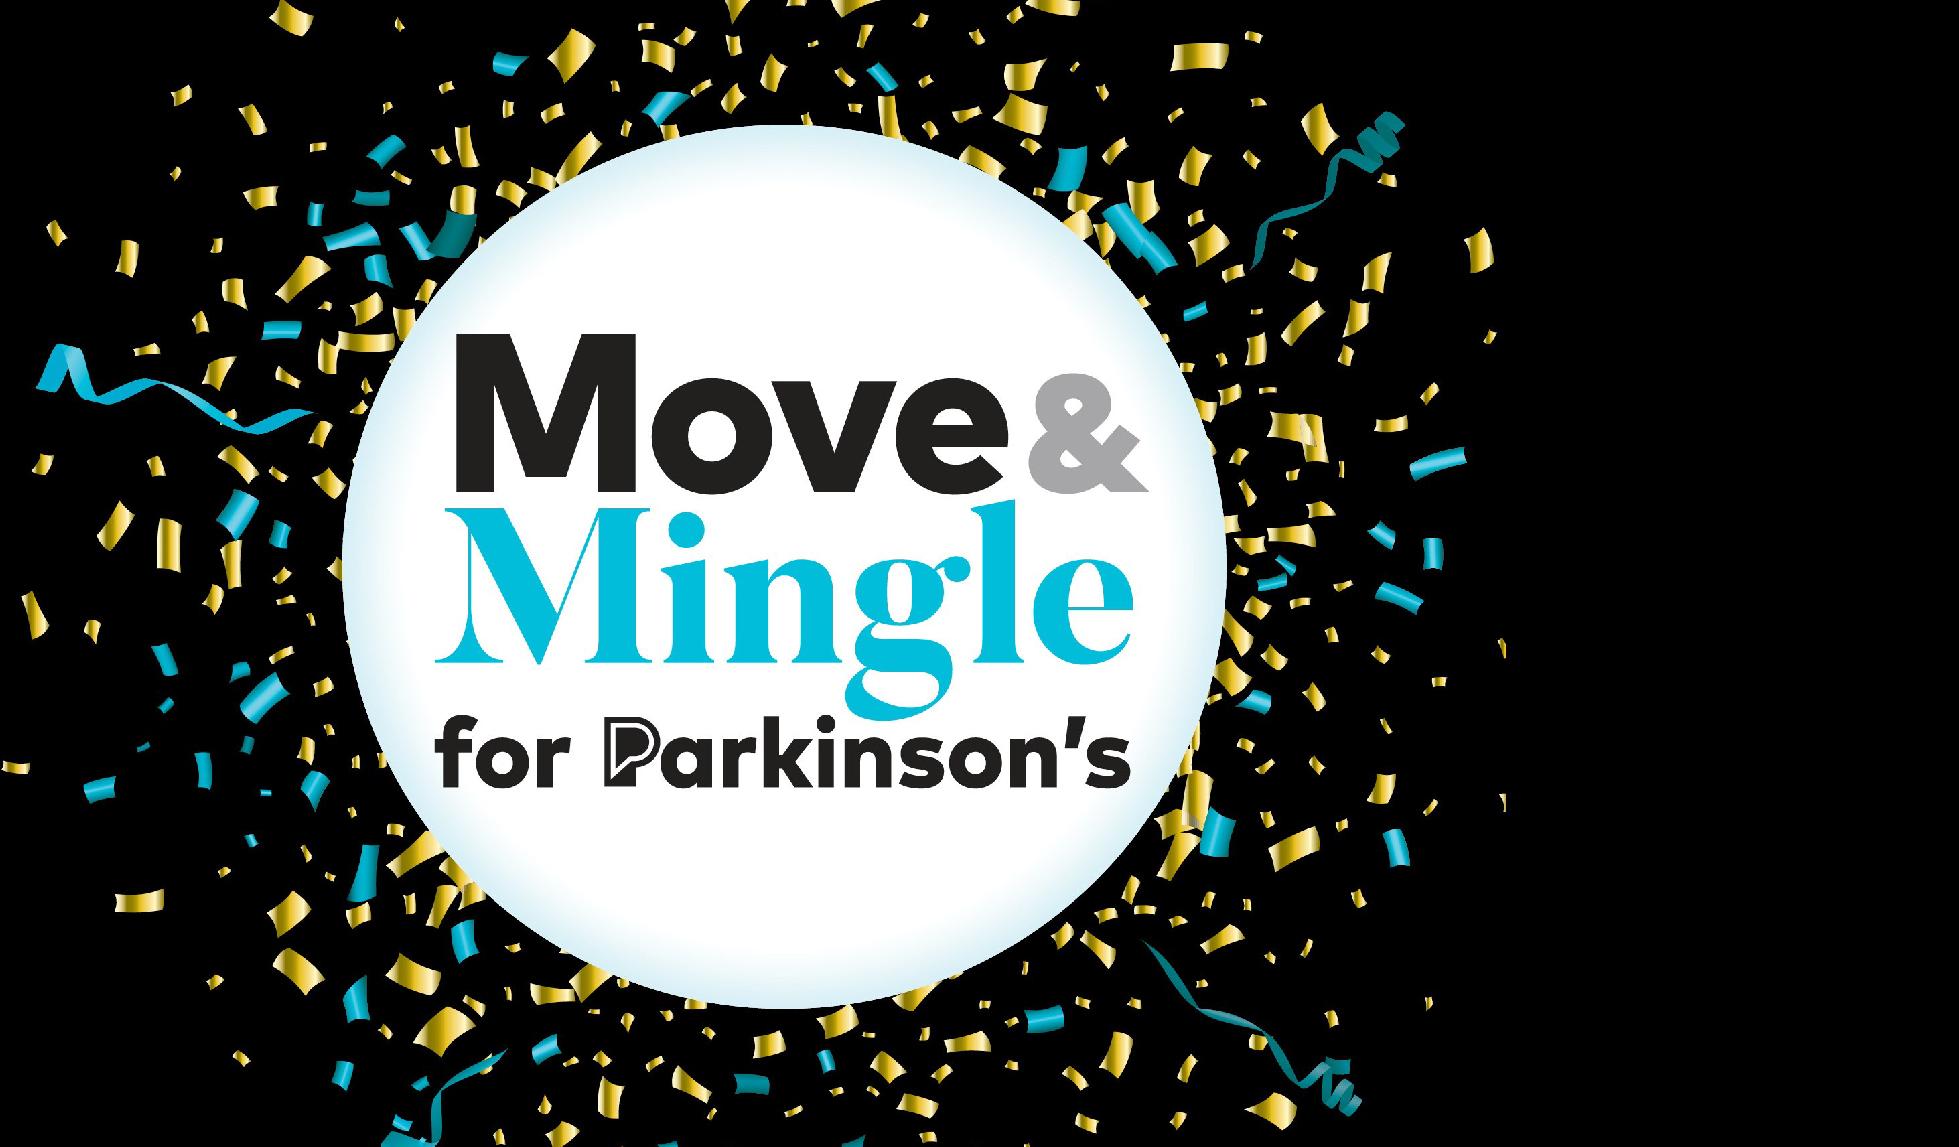 Move & Mingle for Parkinson's